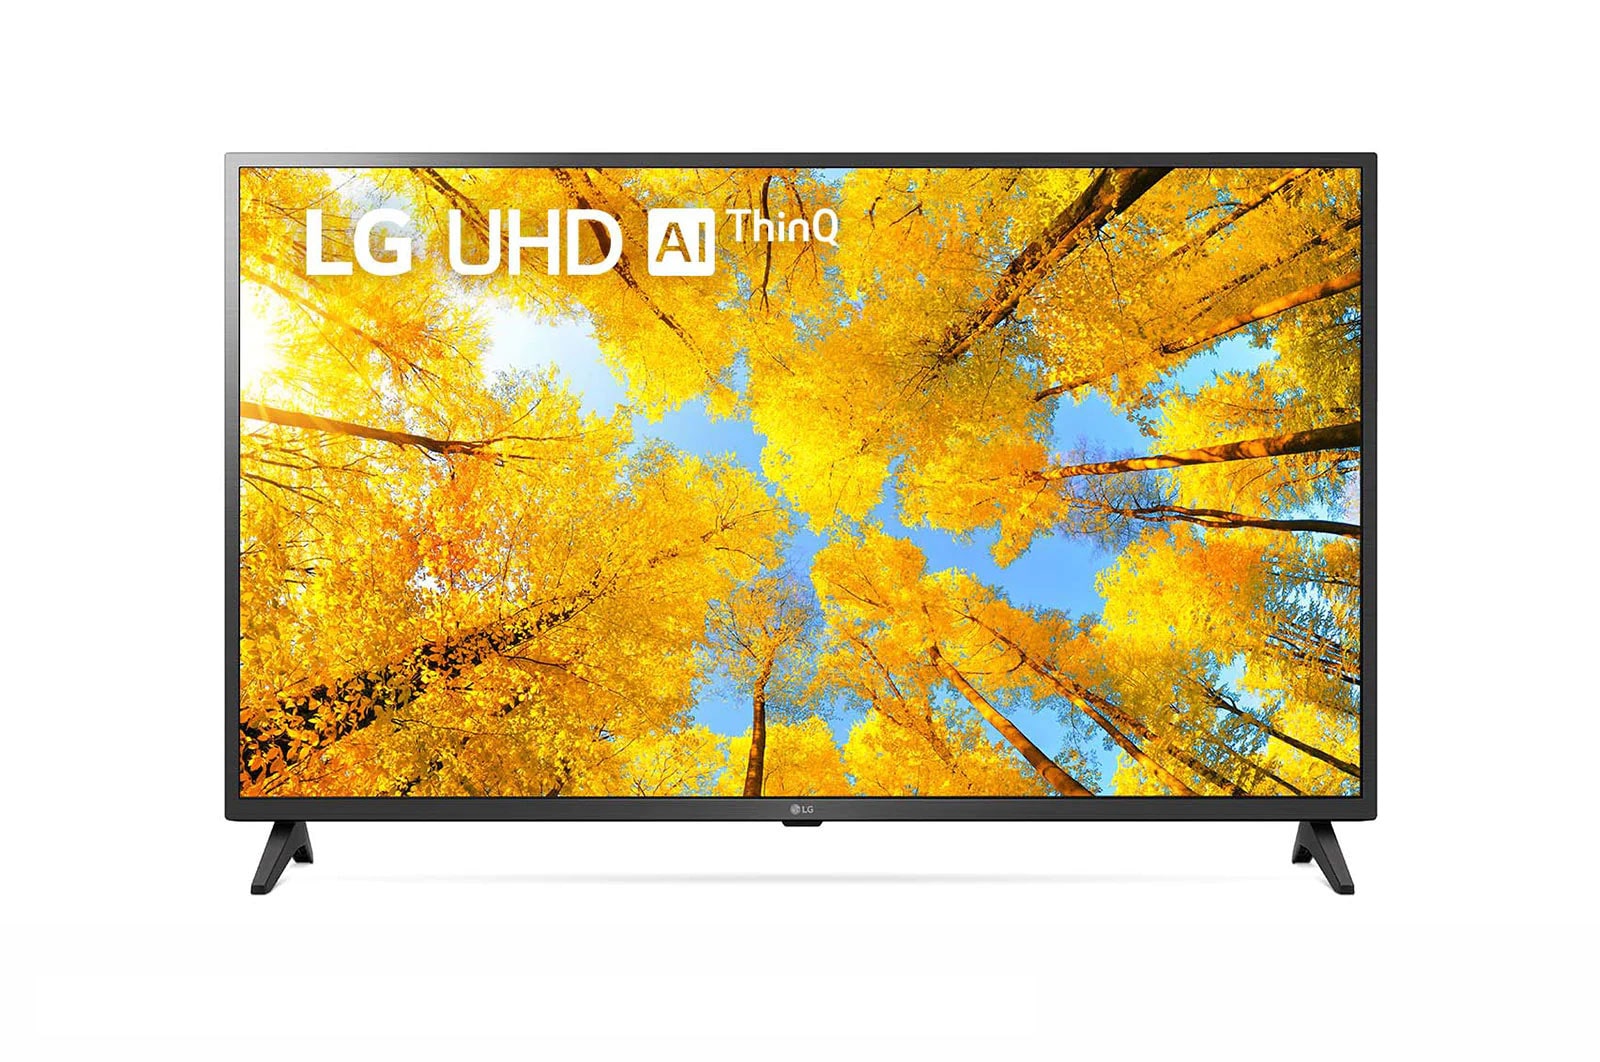 Televisor LG 43 Pulgadas Smart Tv 4k 43uq7500psf Wifi Blueto